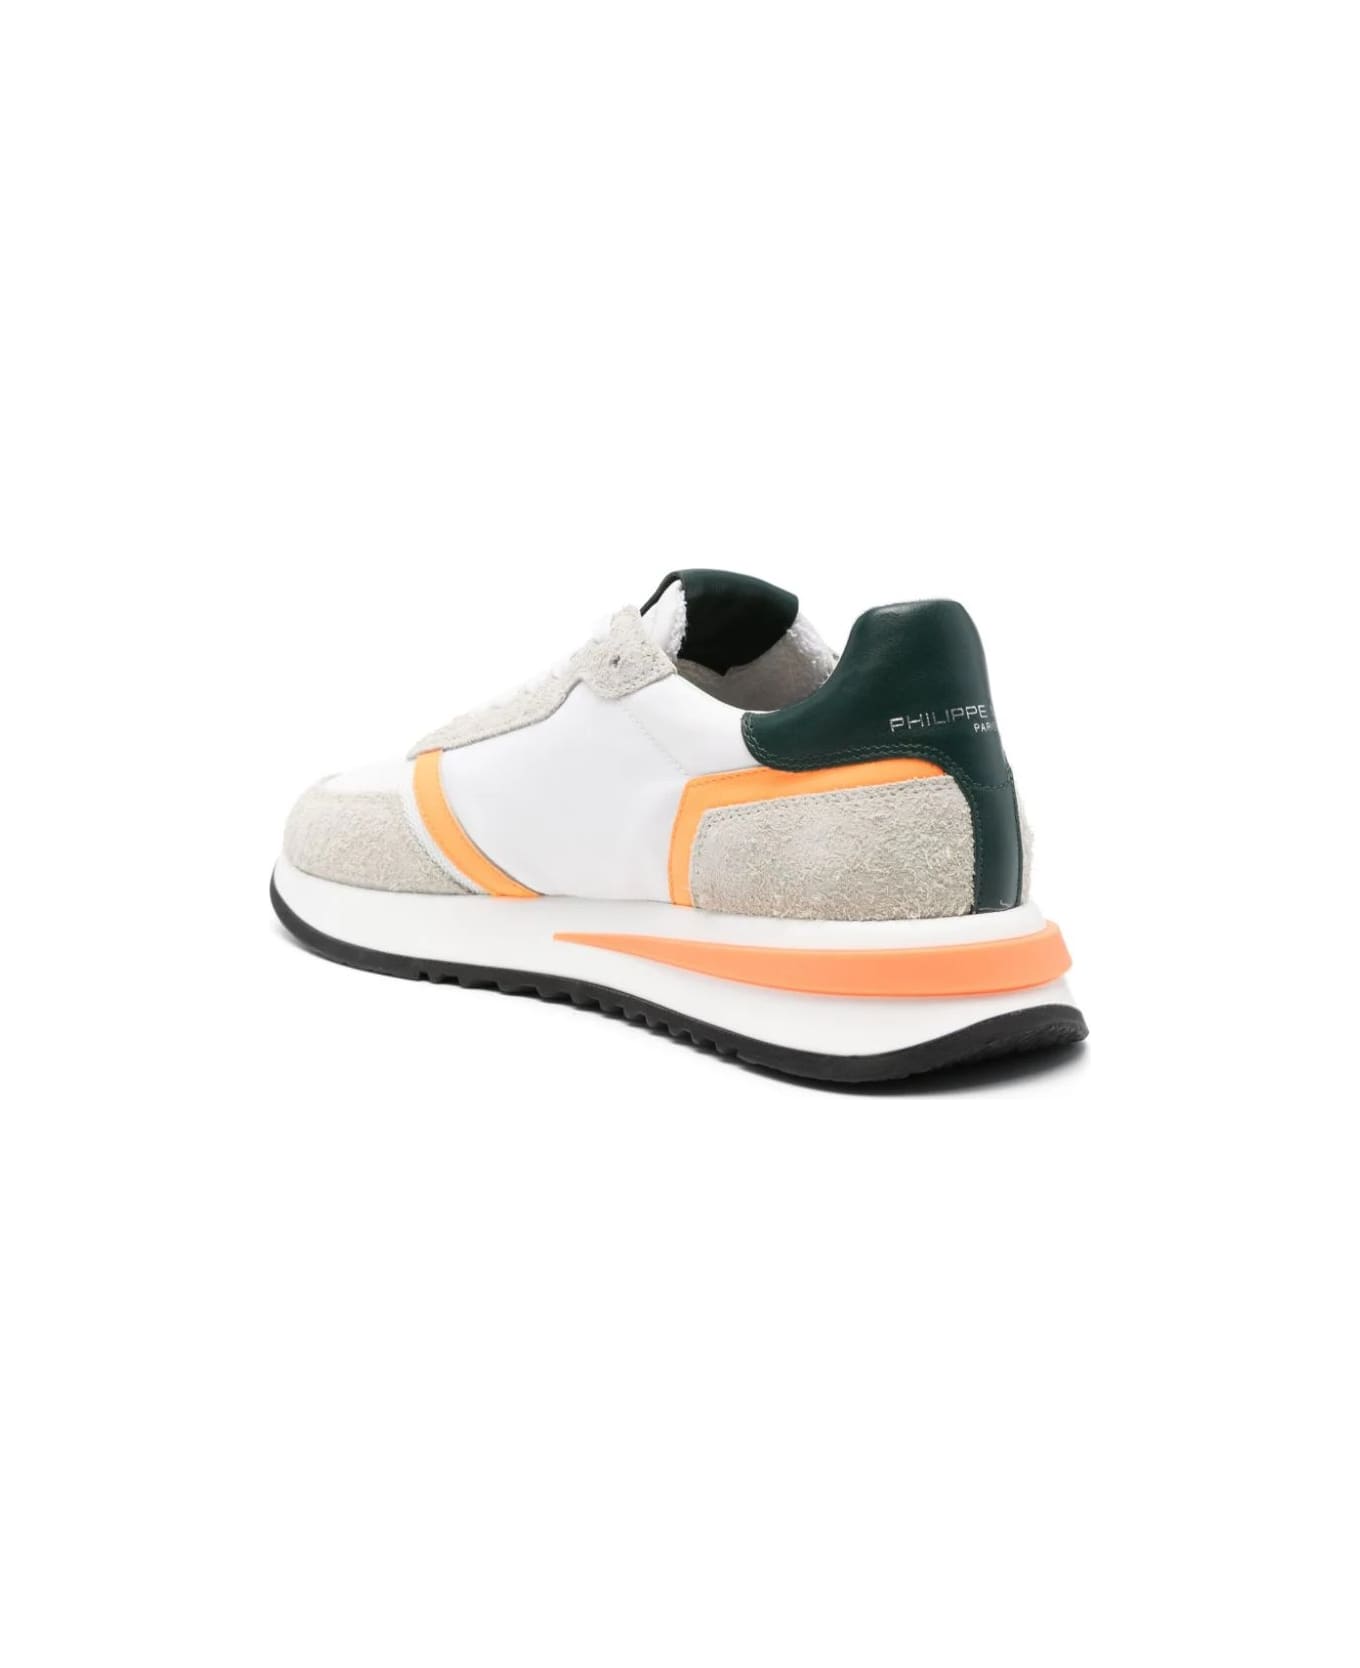 Philippe Model Tropez 2.1 Low Sneakers - White And Orange - Multicolour スニーカー